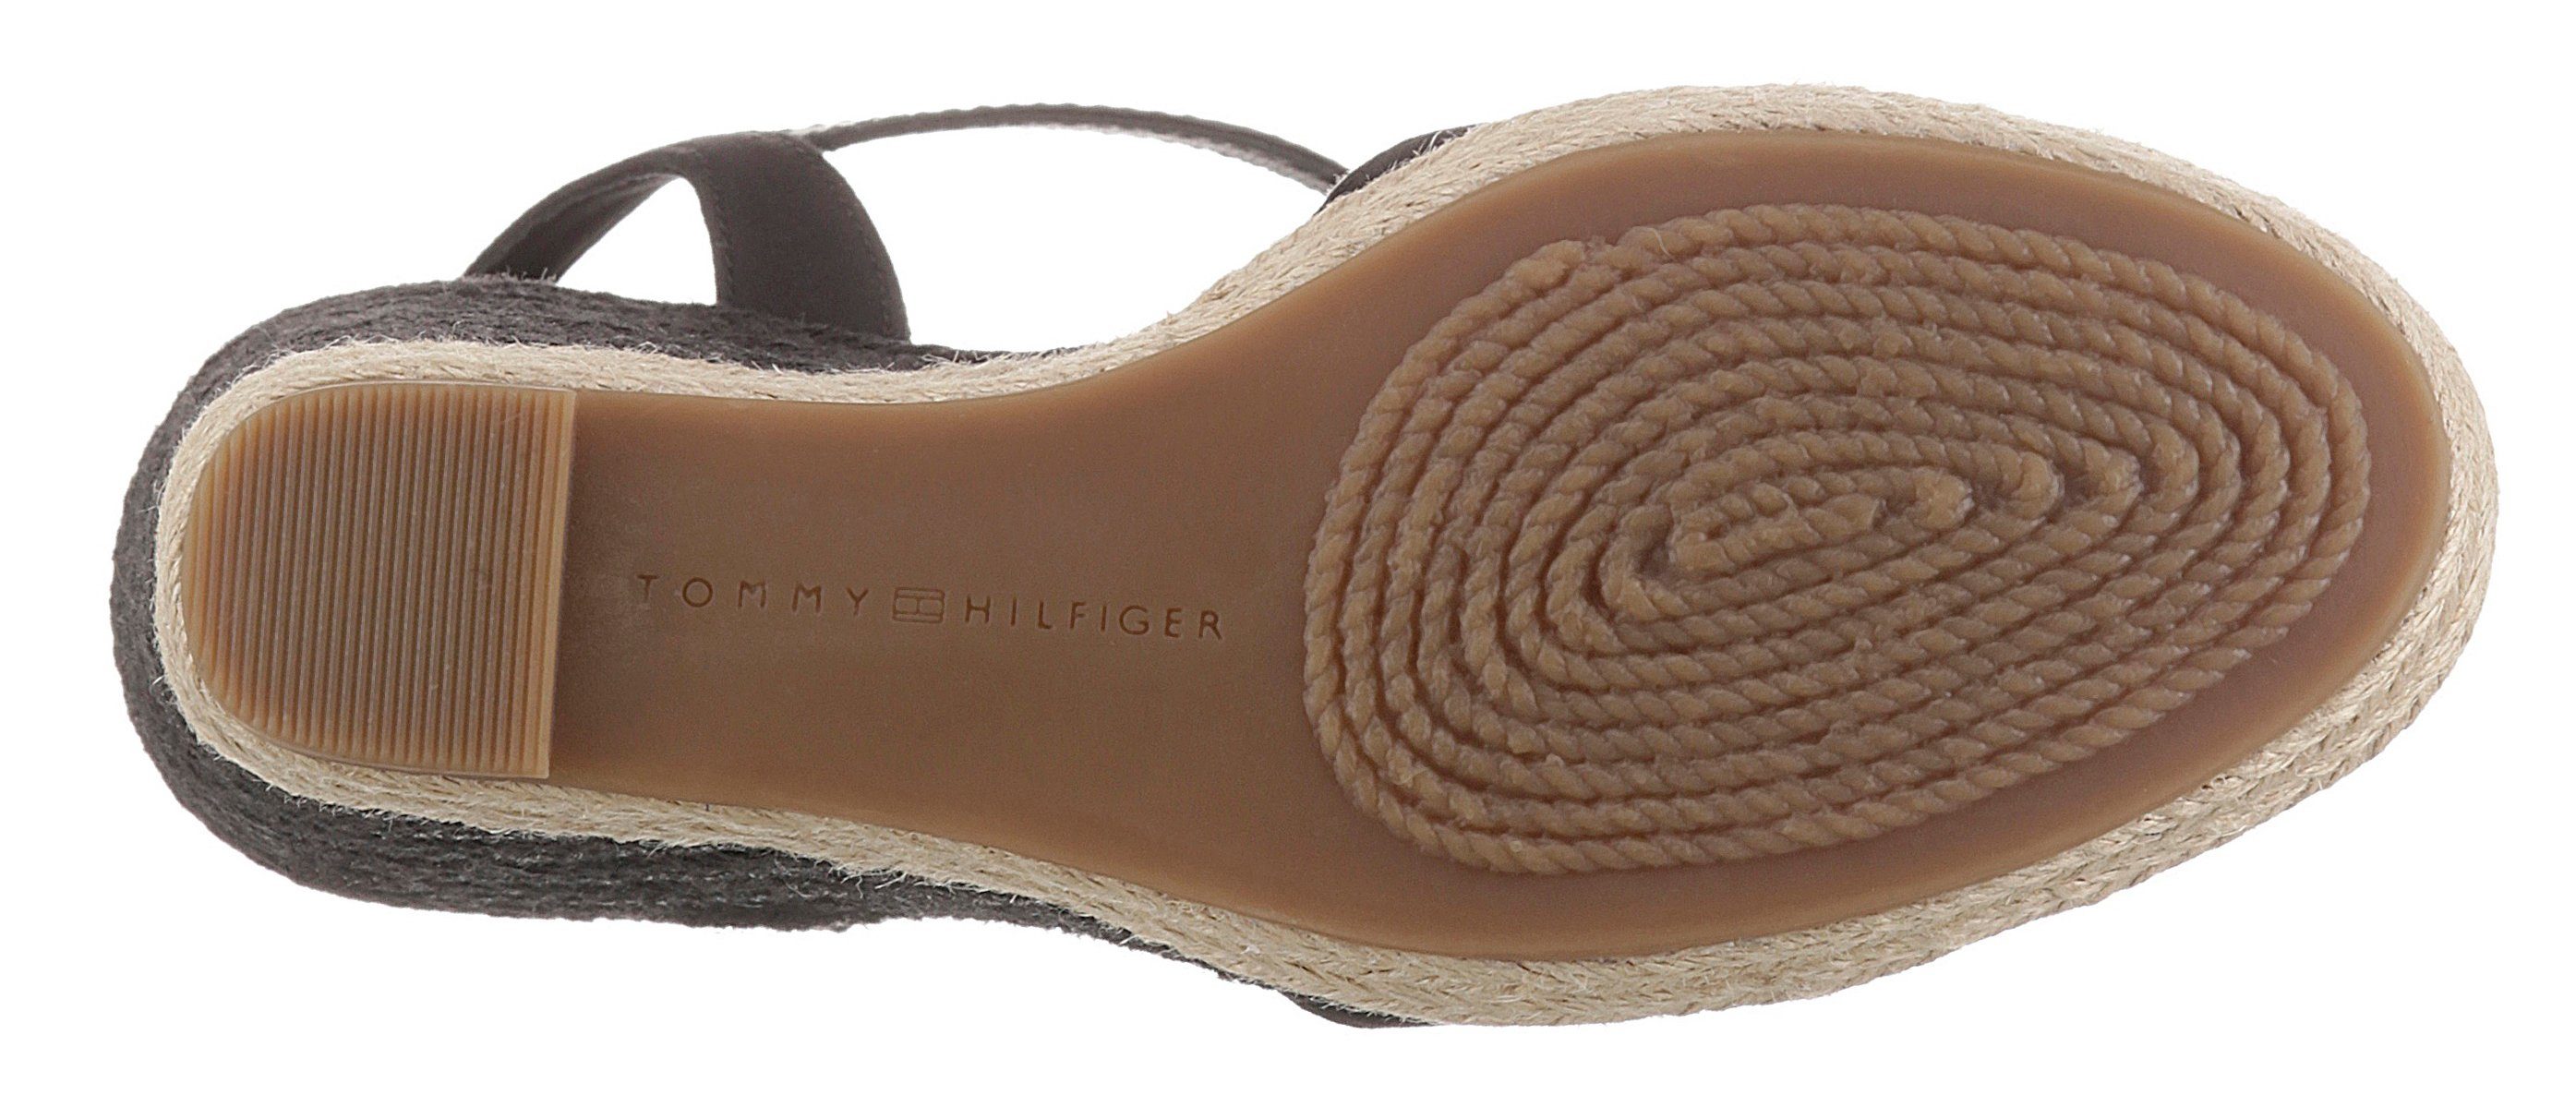 BASIC HIGH mit TOE Hilfiger Tommy WEDGE Black CLOSED Sandalette Keilabsatz bezogenem